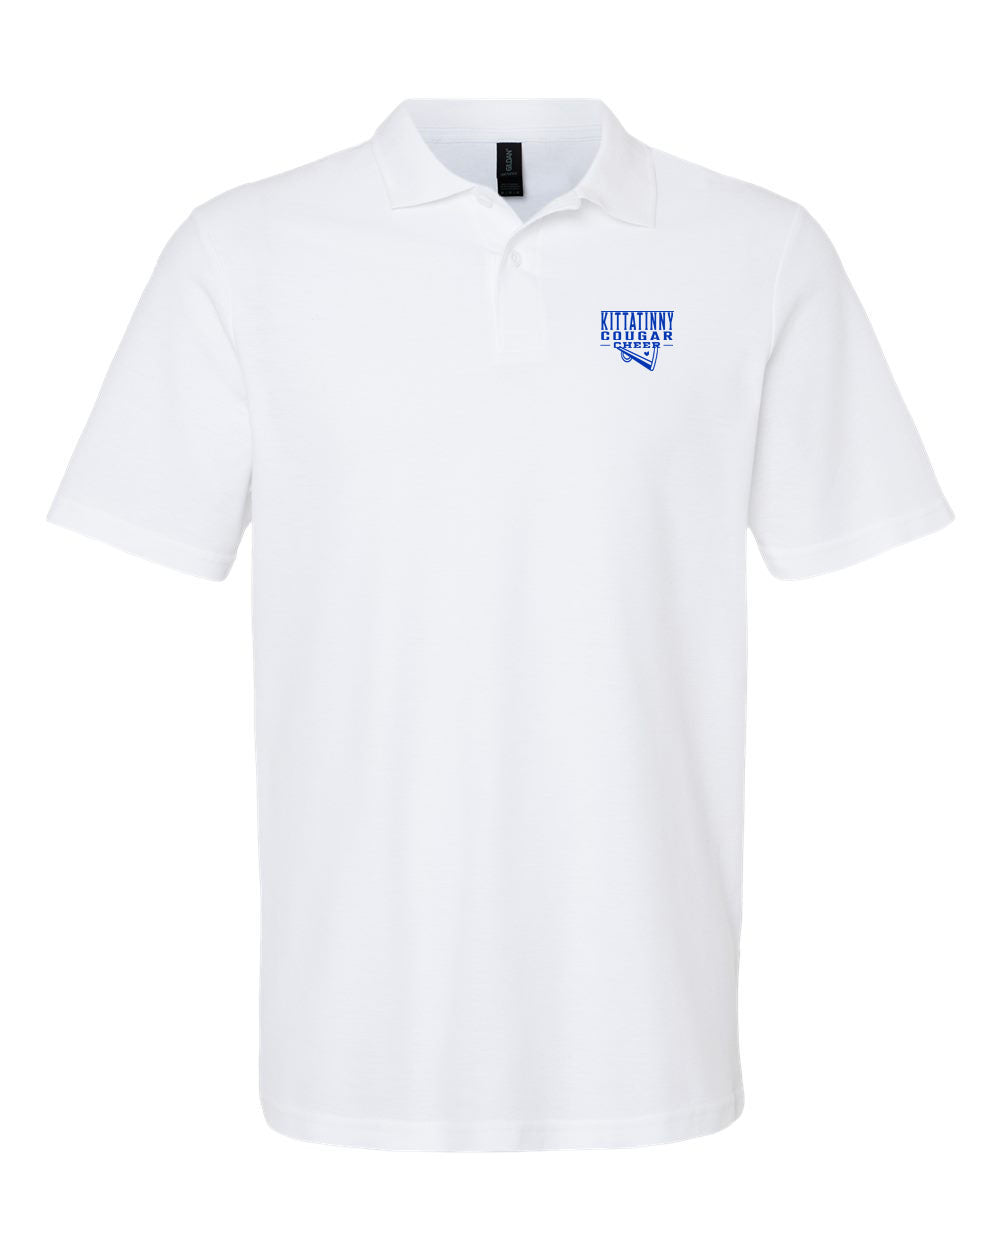 Kittatinny Cheer Polo T-Shirt Design 11